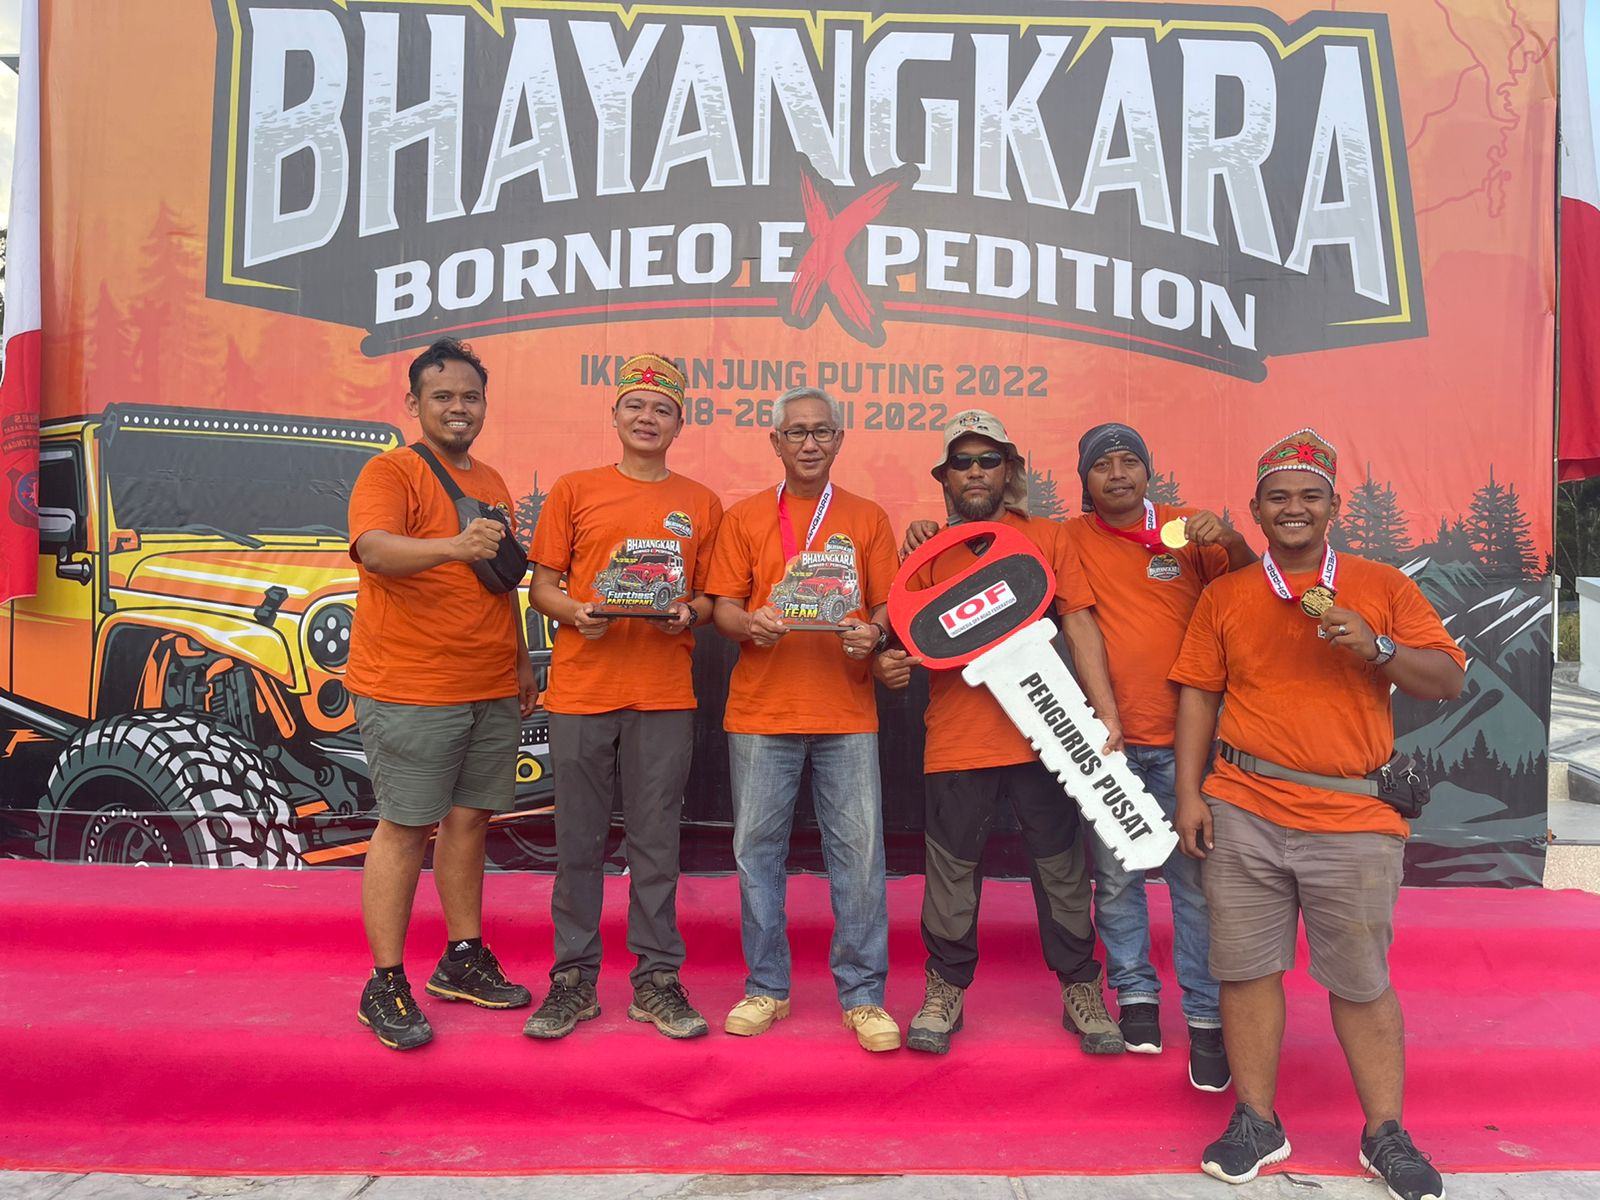 Bhayangkara Borneo Expedition Sukses, Ini Respon Hendry Endy